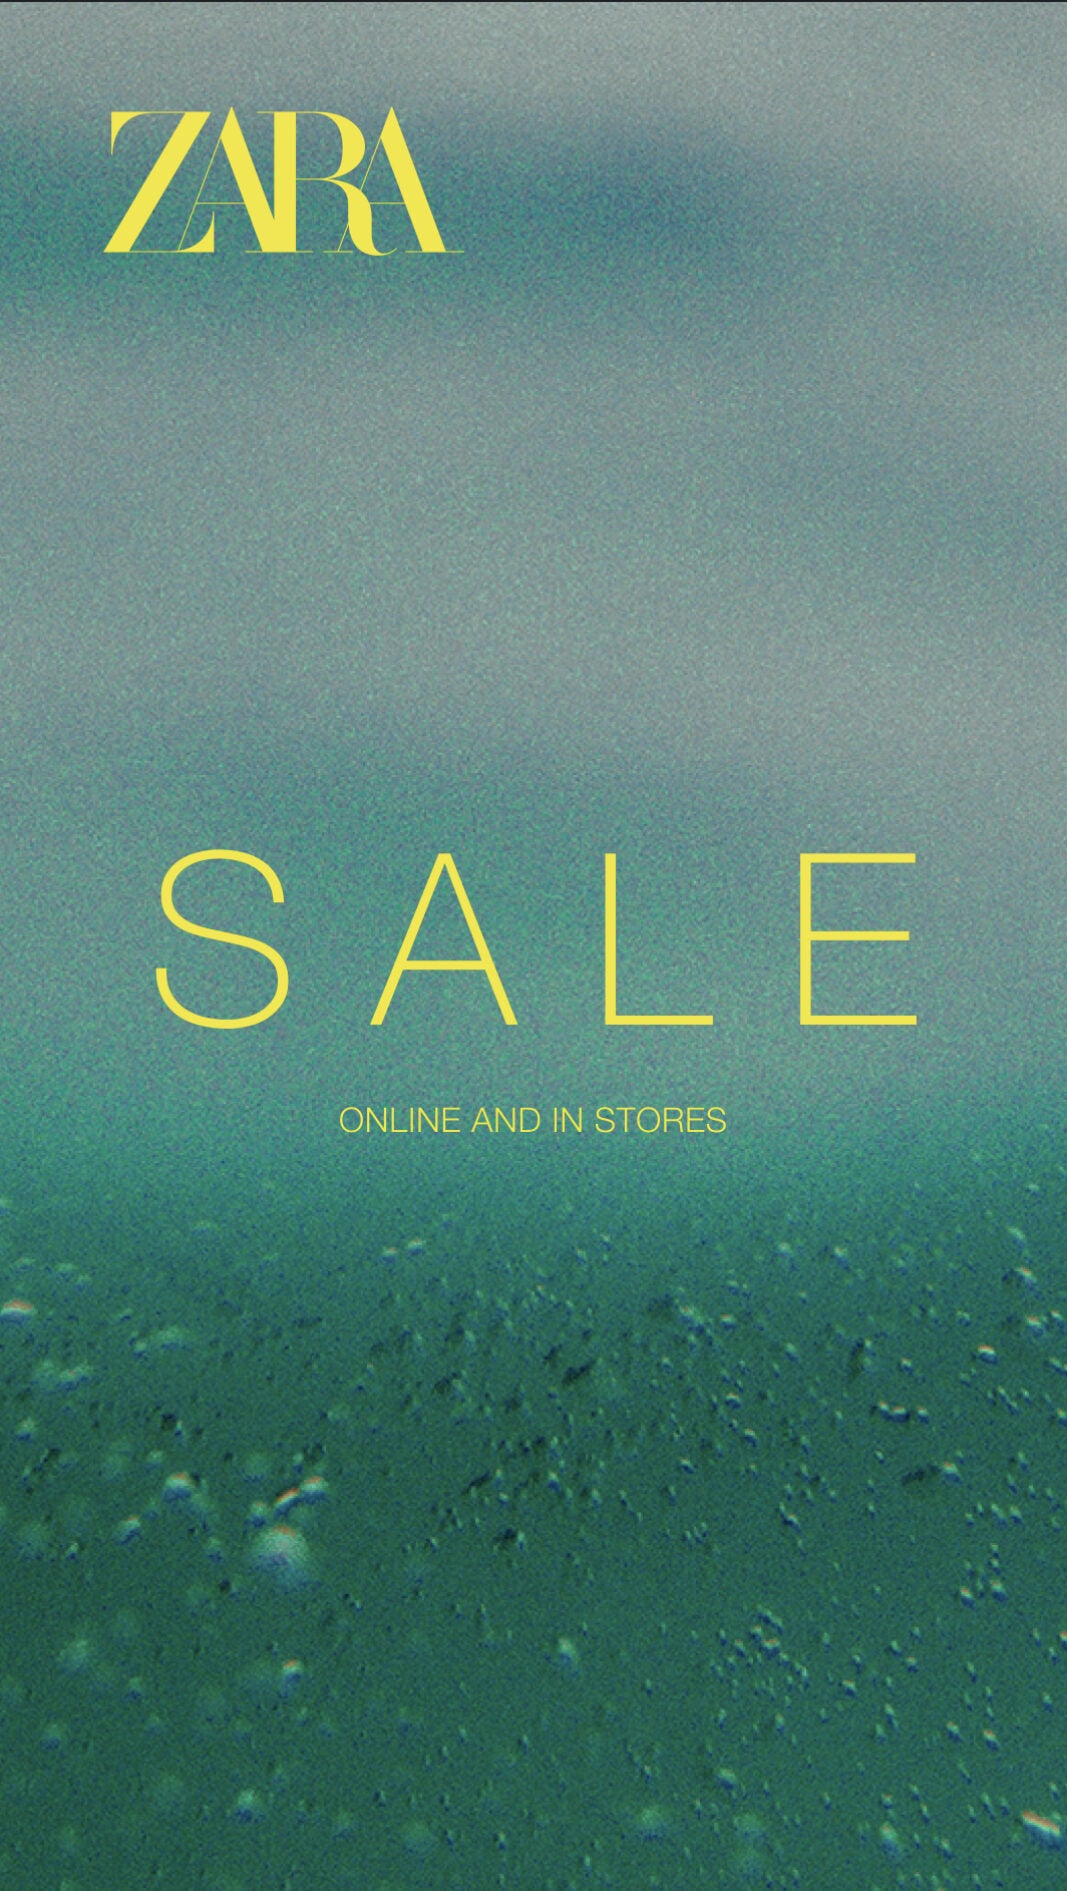 Zara] SALE now in stores and online - RedFlagDeals.com Forums